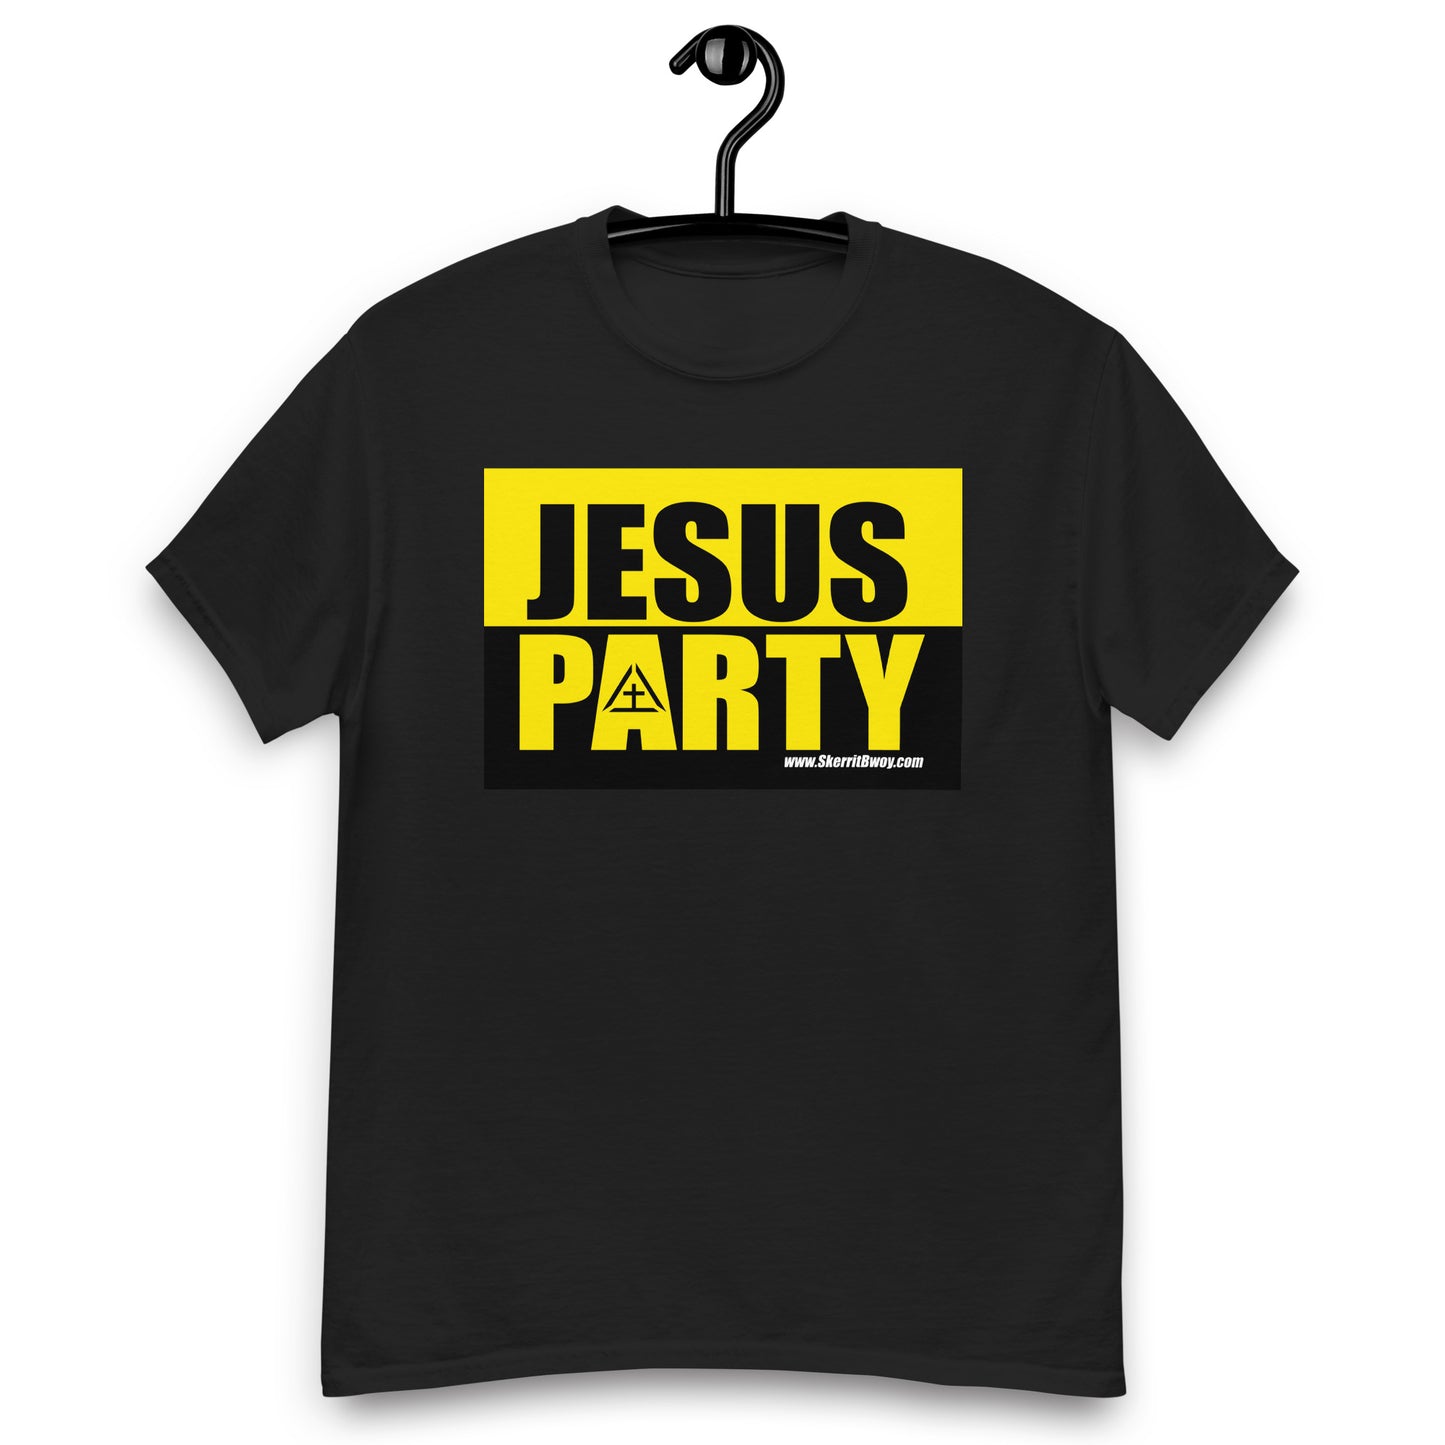 Jesus Party - Men's classic tee